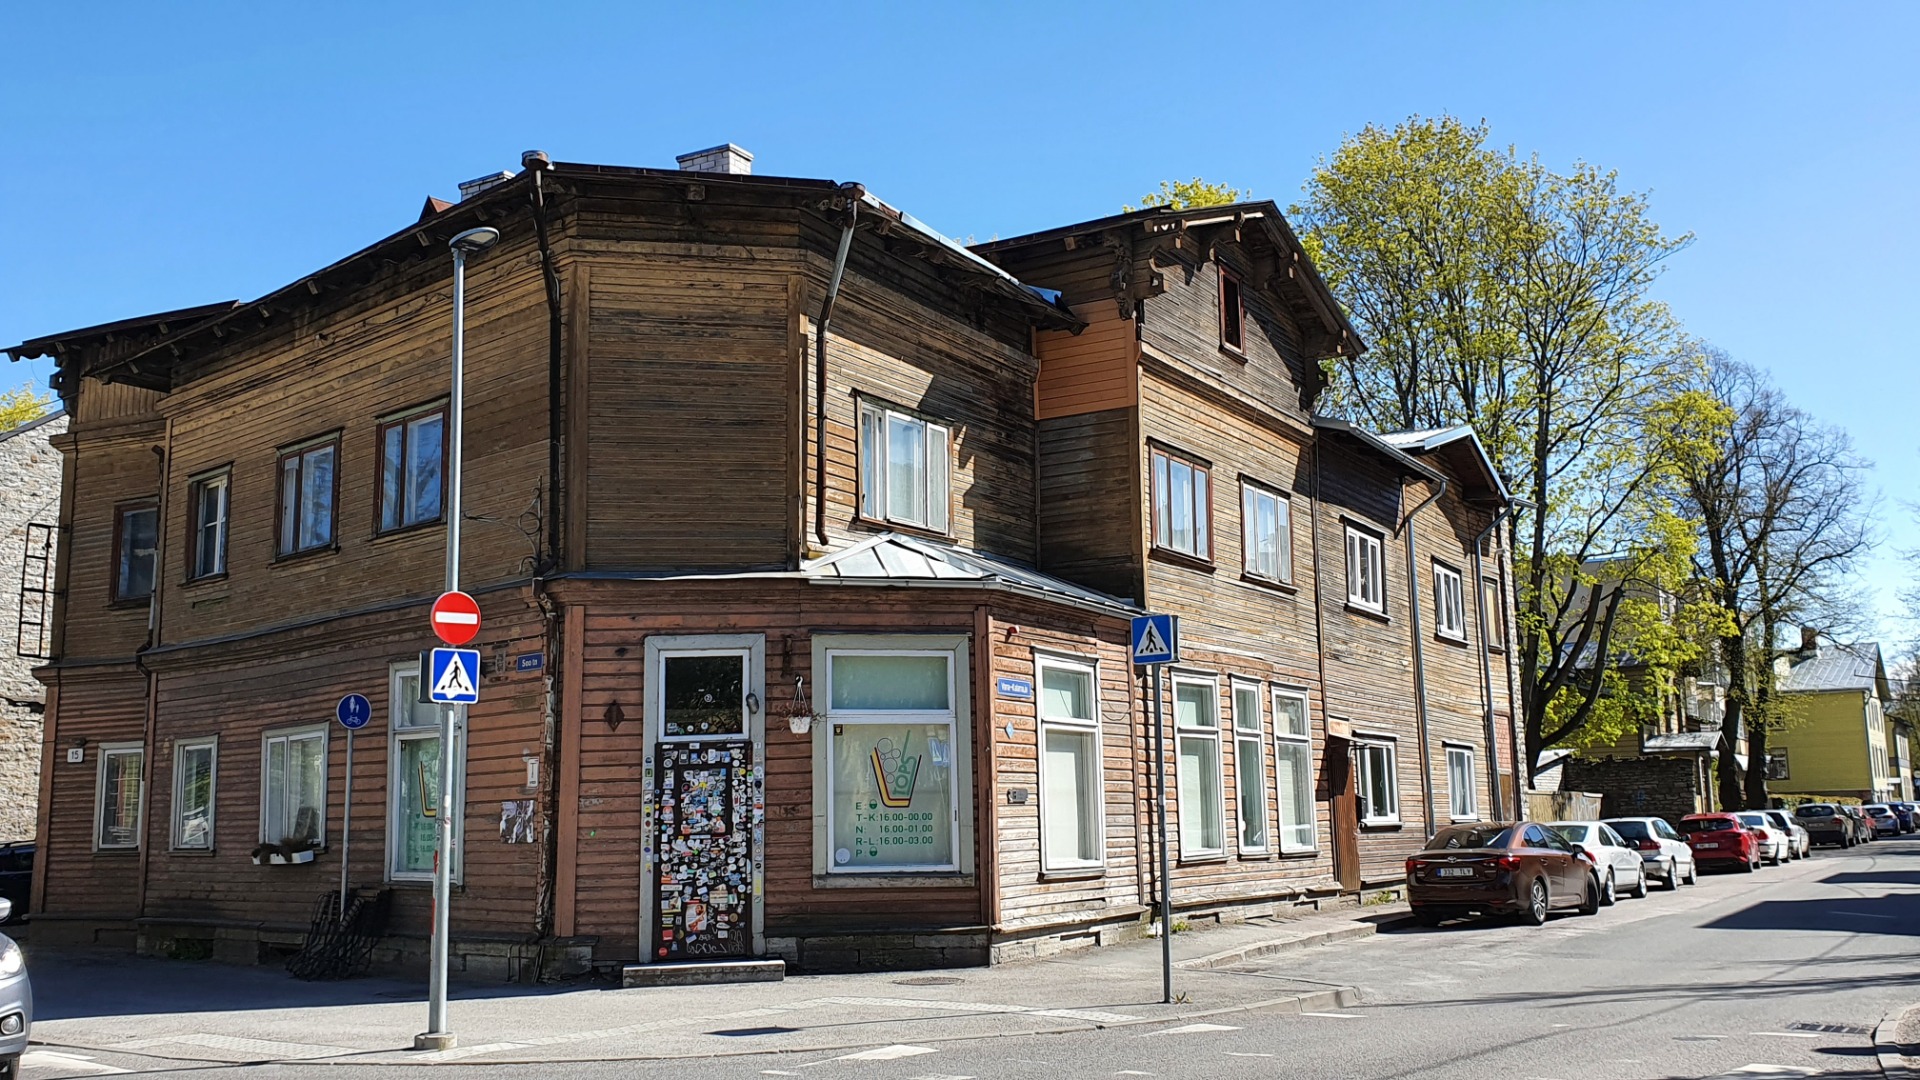 View of the building J. Nikonov Street 17. rephoto